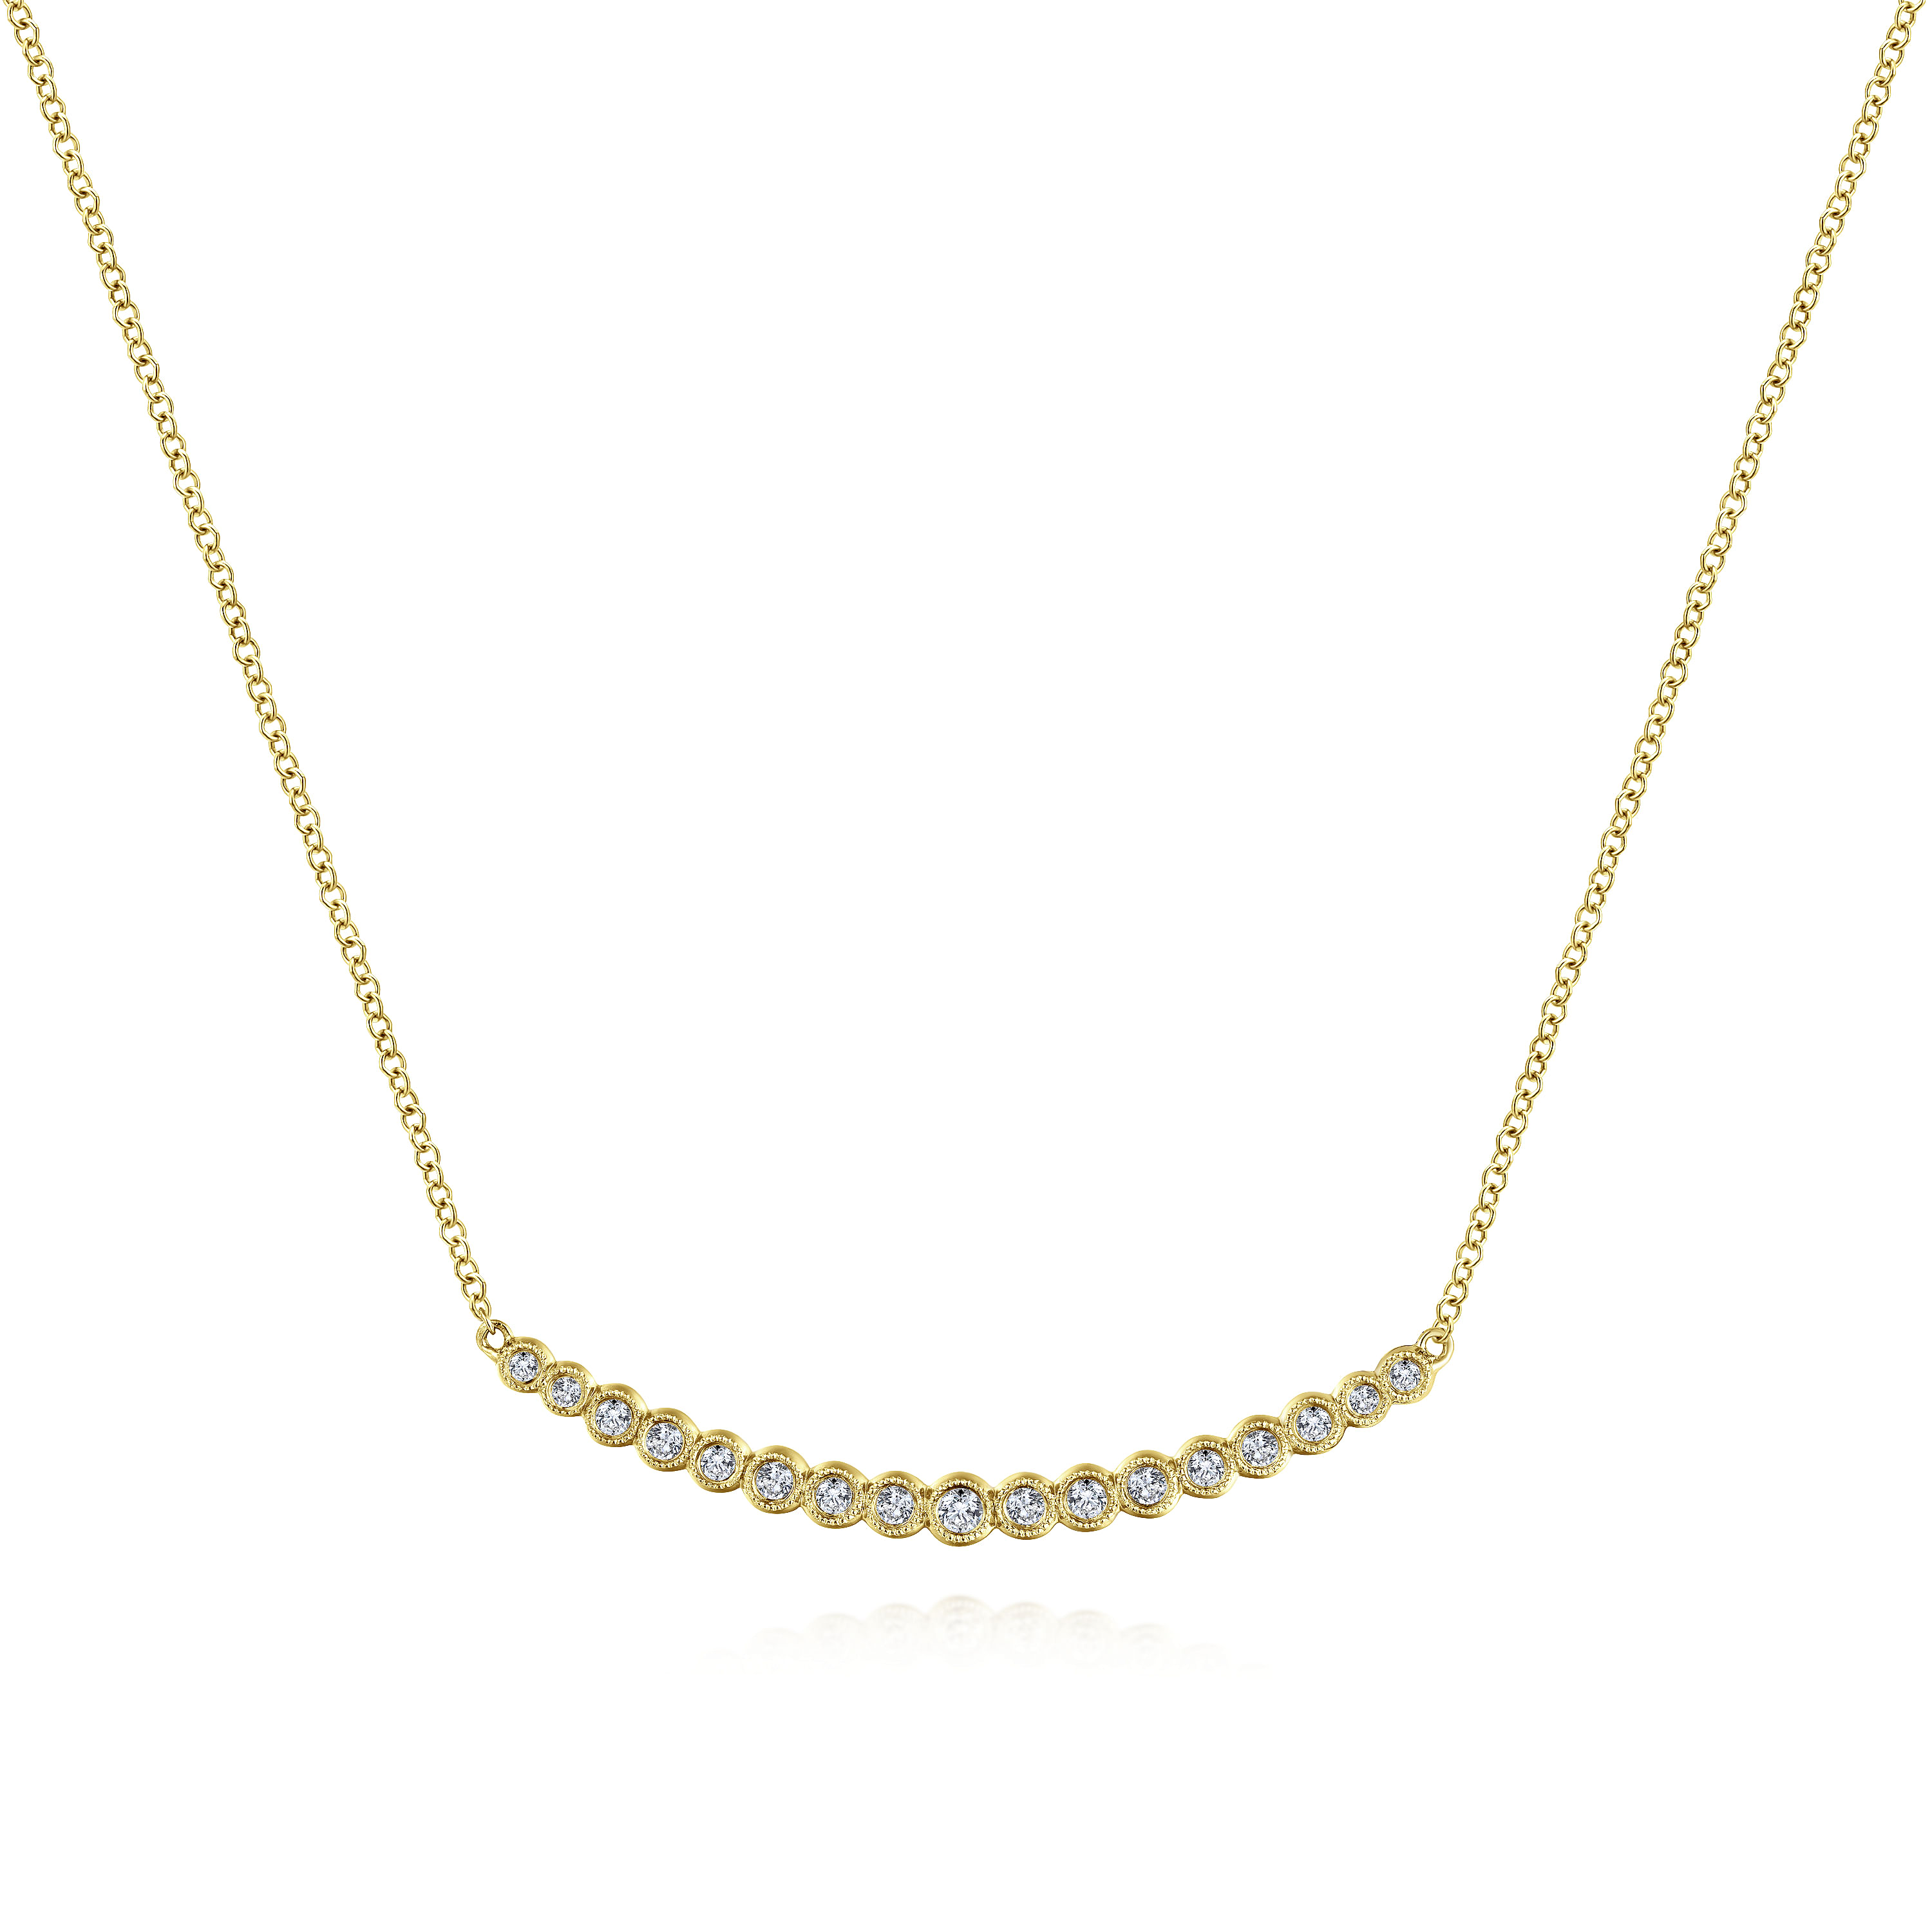 Gabriel - 14K Yellow Gold Curved Bar Necklace with Bezel Set Round Diamonds